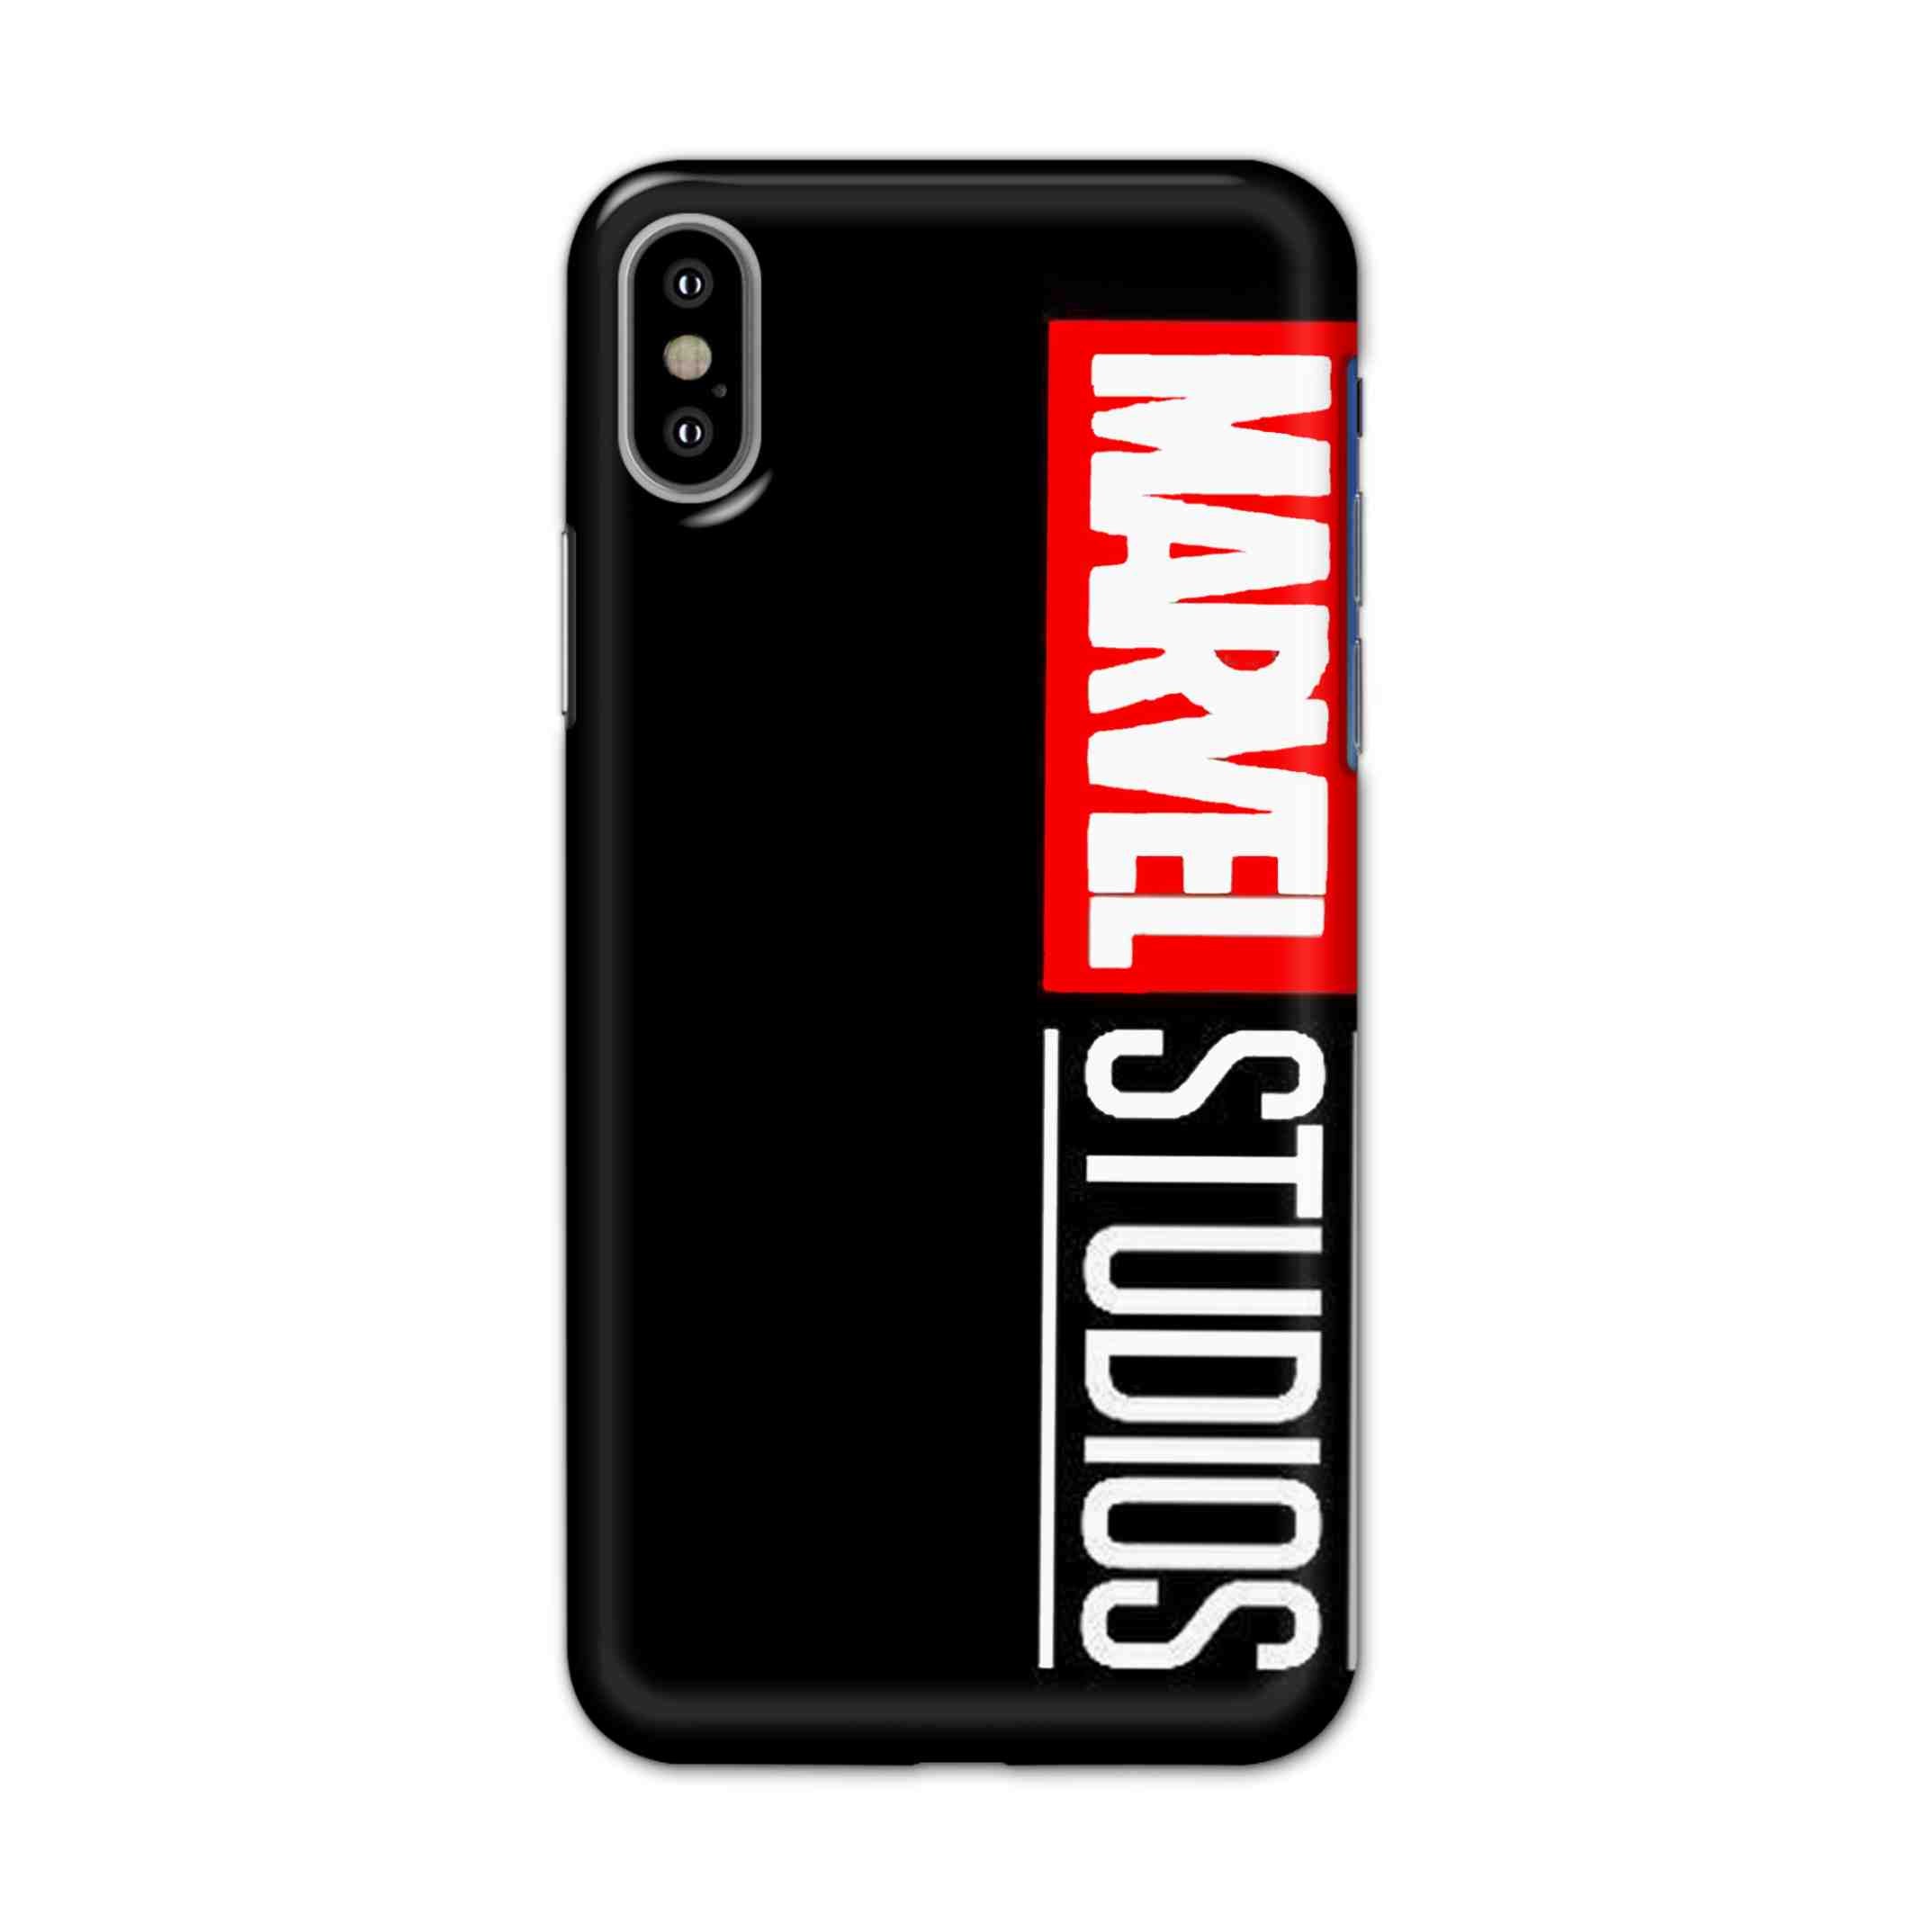 Buy Marvel Studio Hard Back Mobile Phone Case/Cover For iPhone X Online